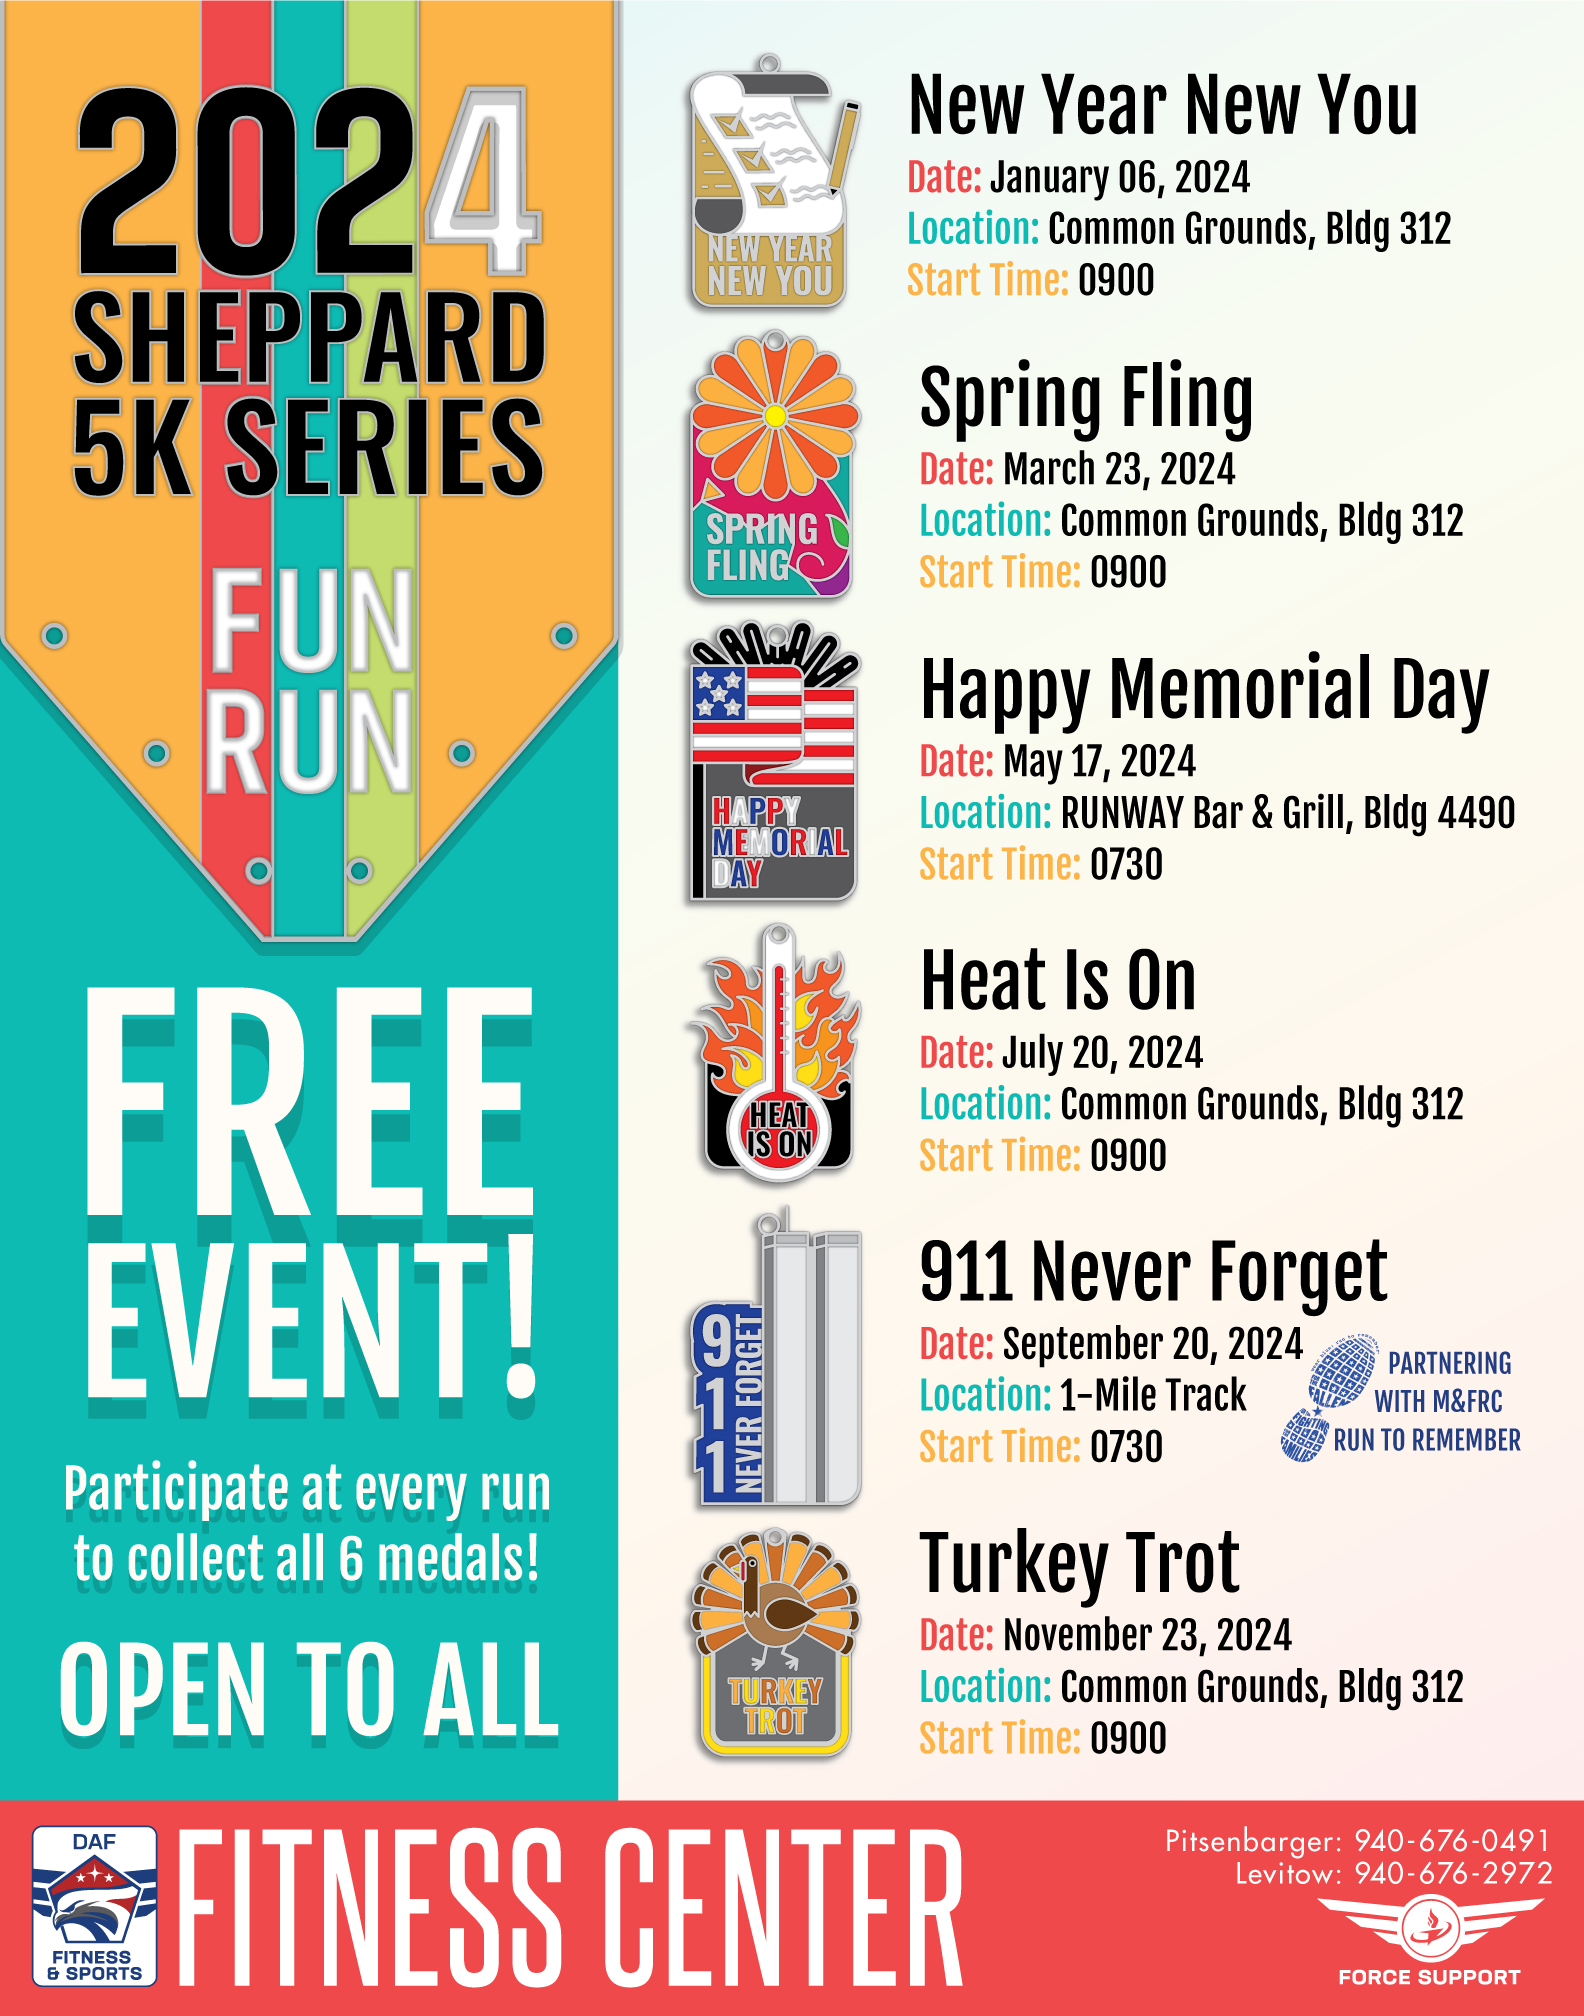 Sheppard Fun Run 5K Series